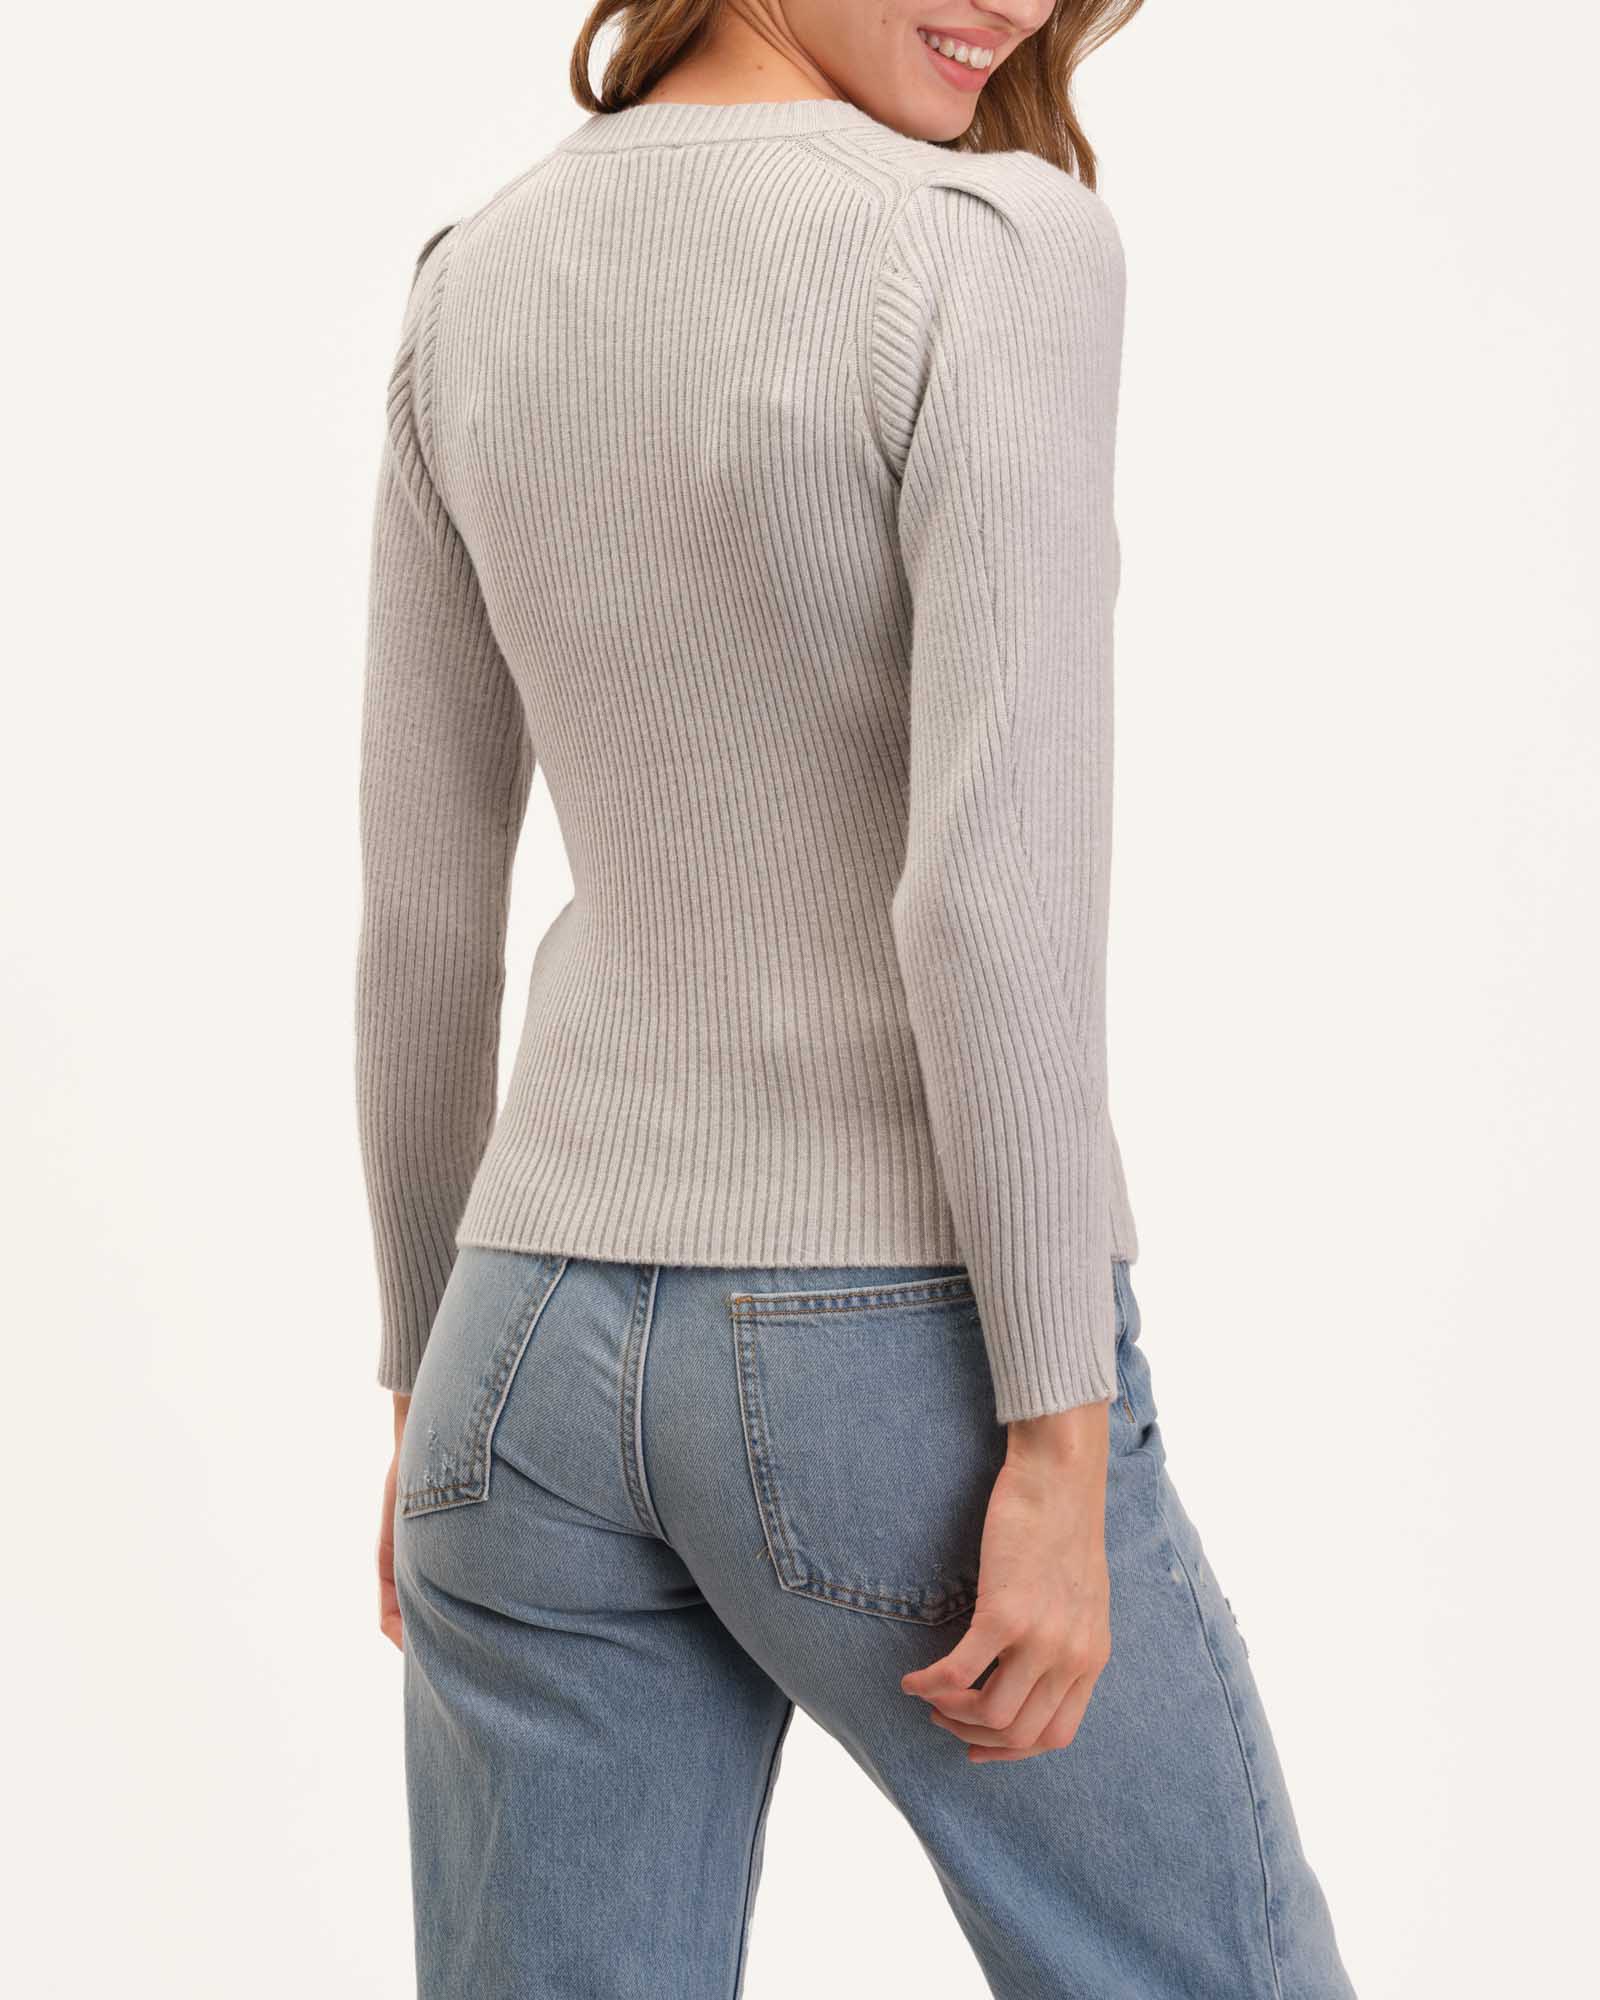 Shop Puff Pleated Sleeve Crew Neck Pullover | Elie Elie Tahari | JANE + MERCER